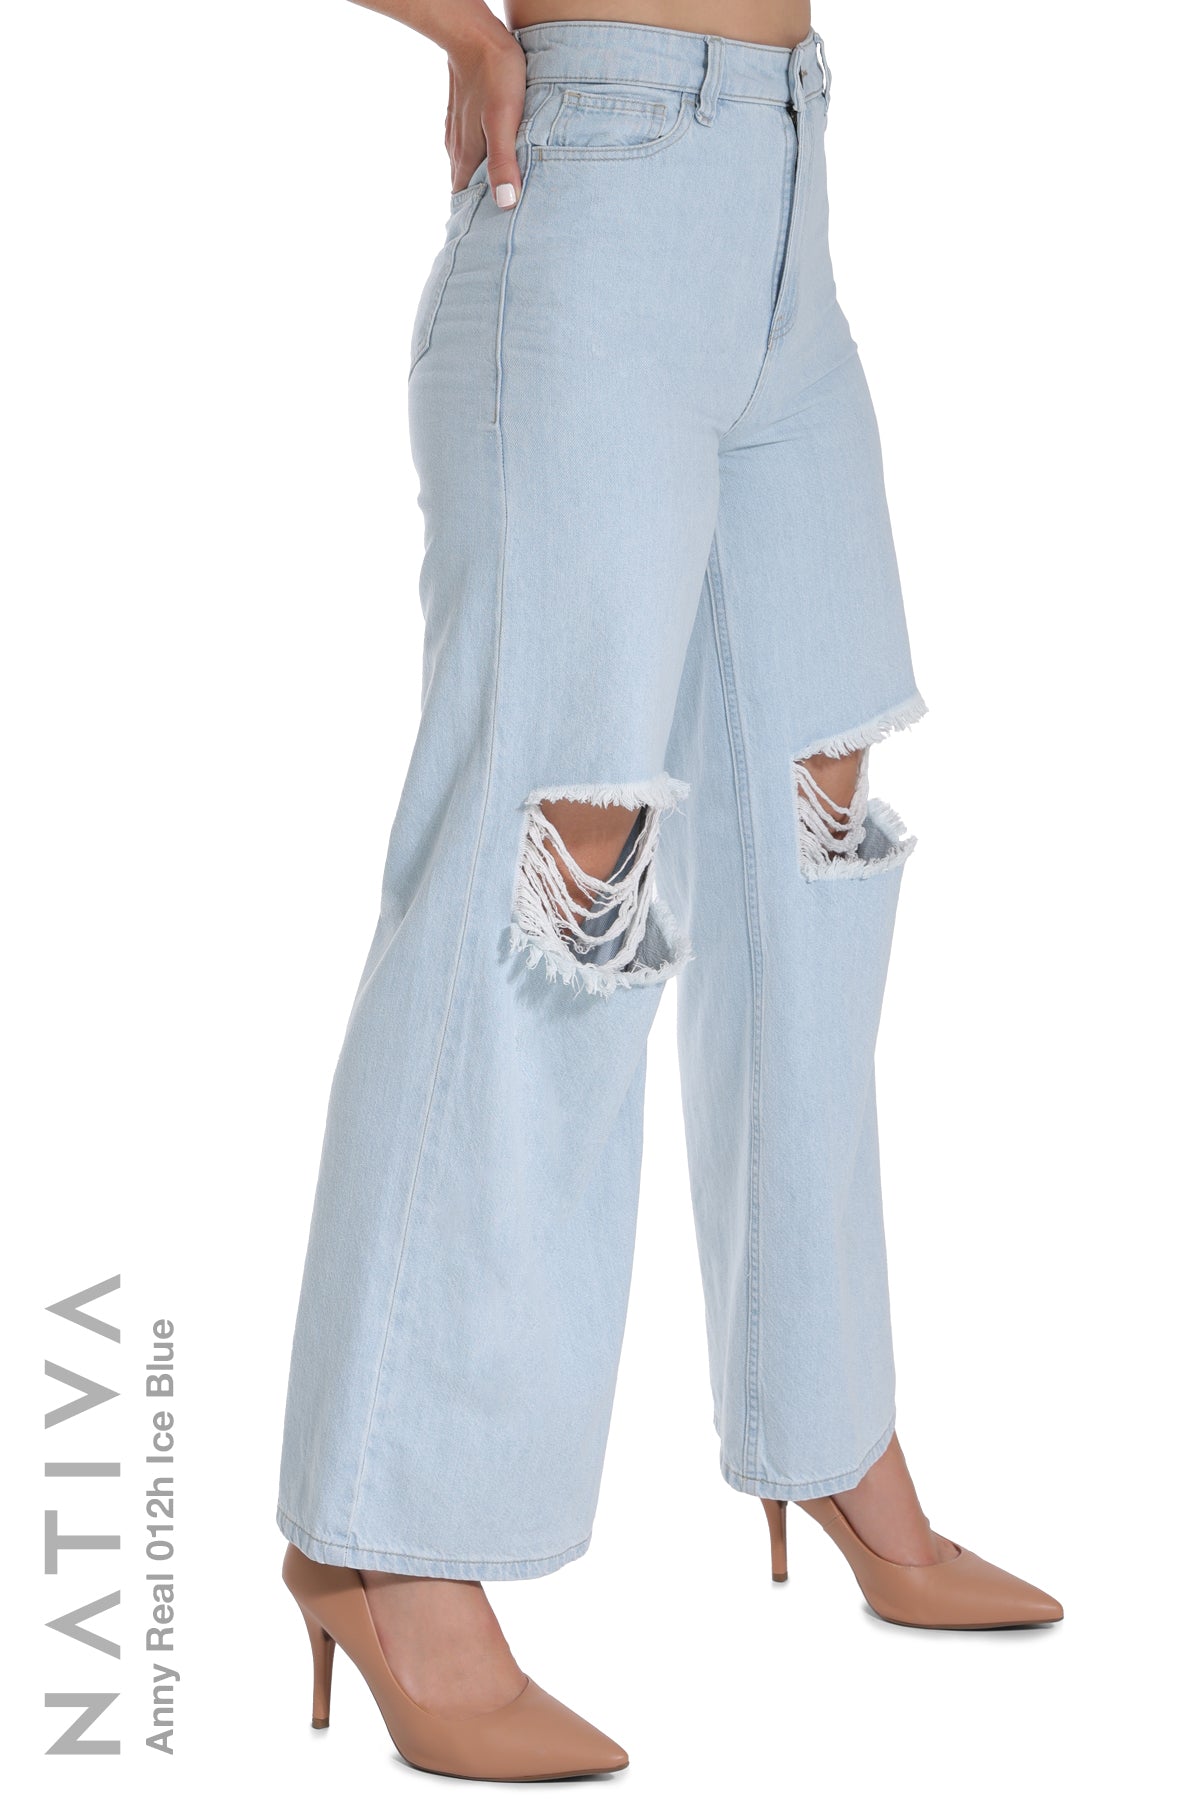 WIDE LEG True Denim Jeans, ANNY REAL 012H ICE BLUE. Talle Alto. Auténtico e Interminable. Cintura Ajustable PERFECT FIT®